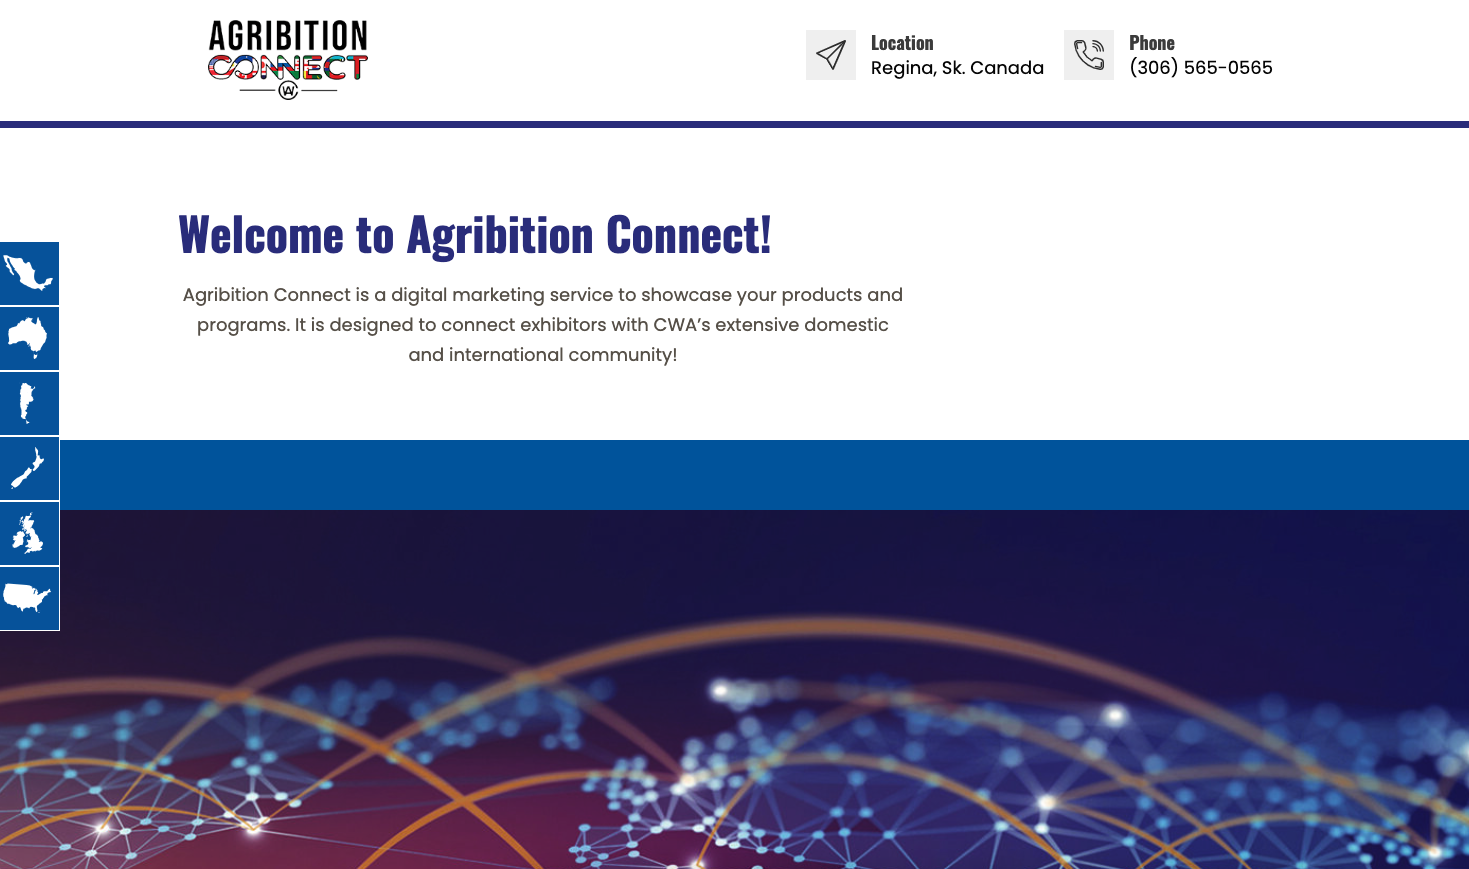 AgribitionConnect website by OmniOnline Regina